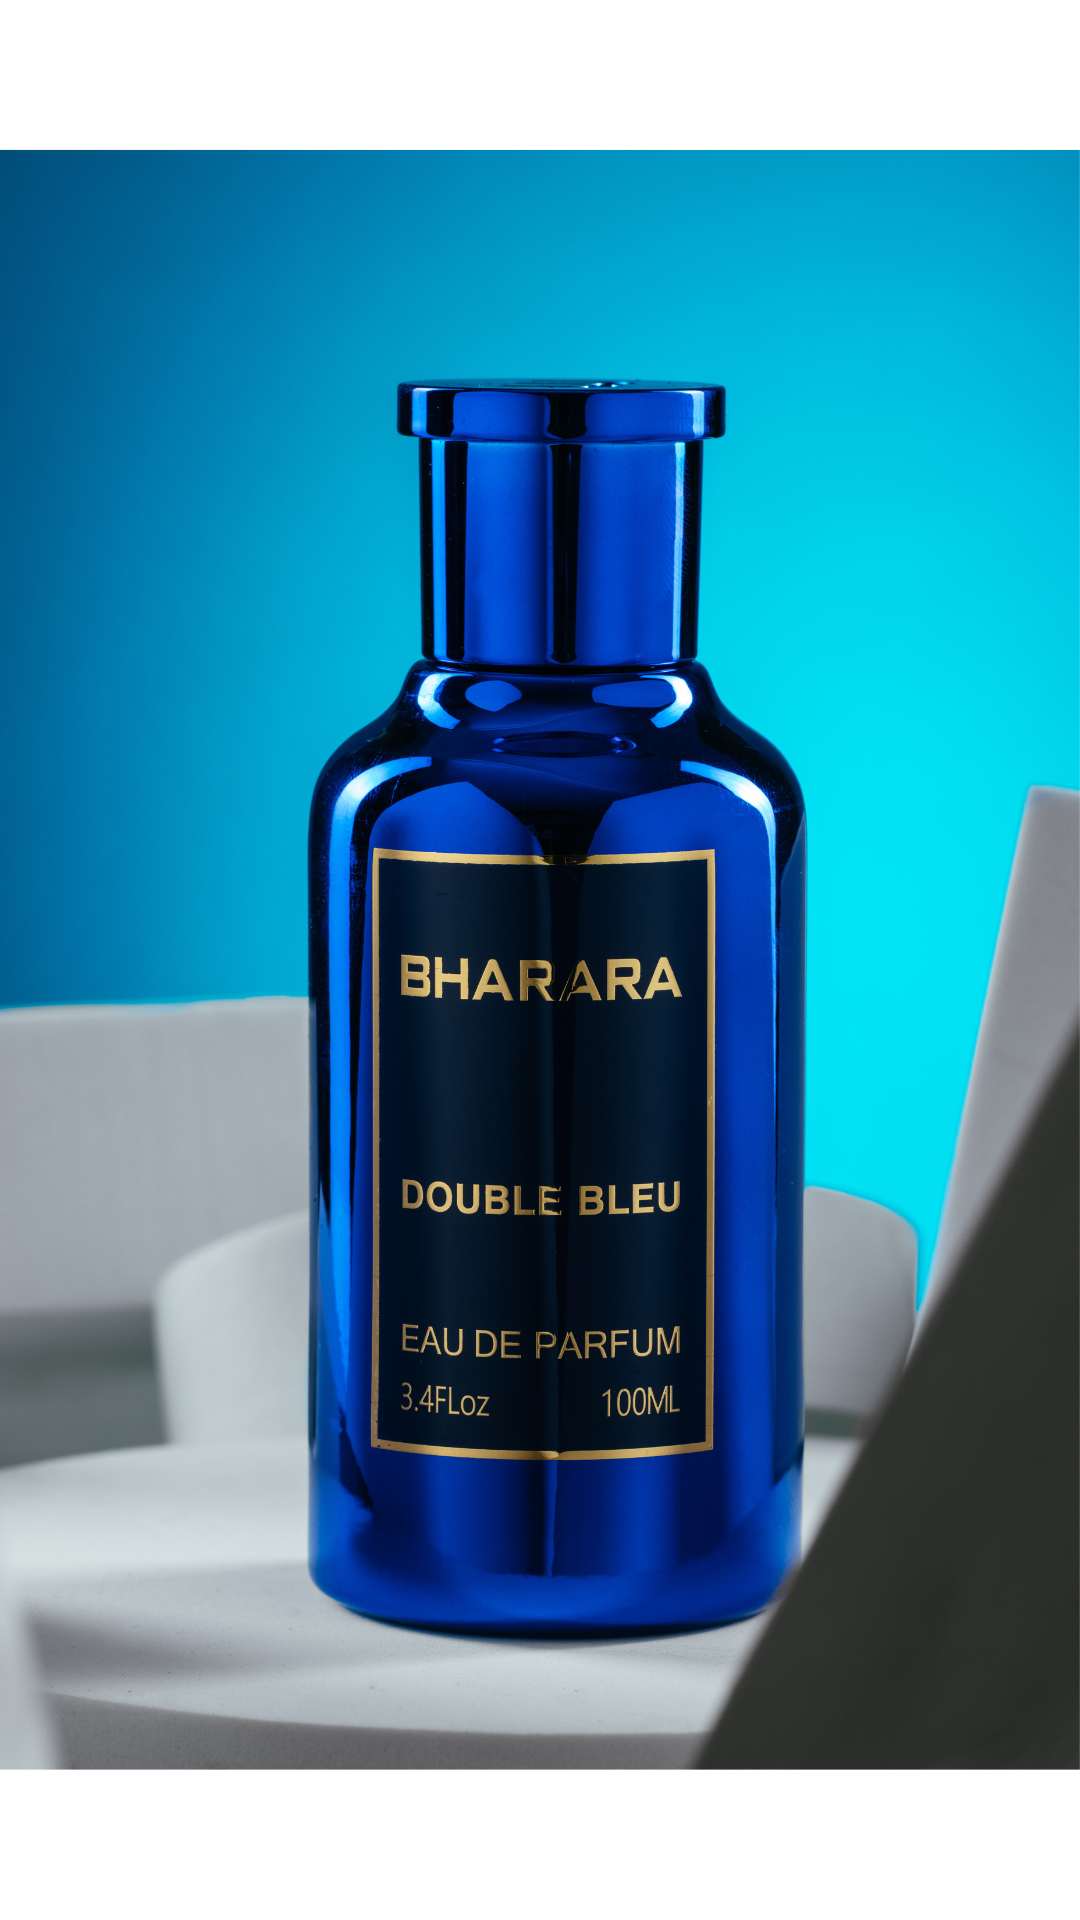 bharara bleu pour homme